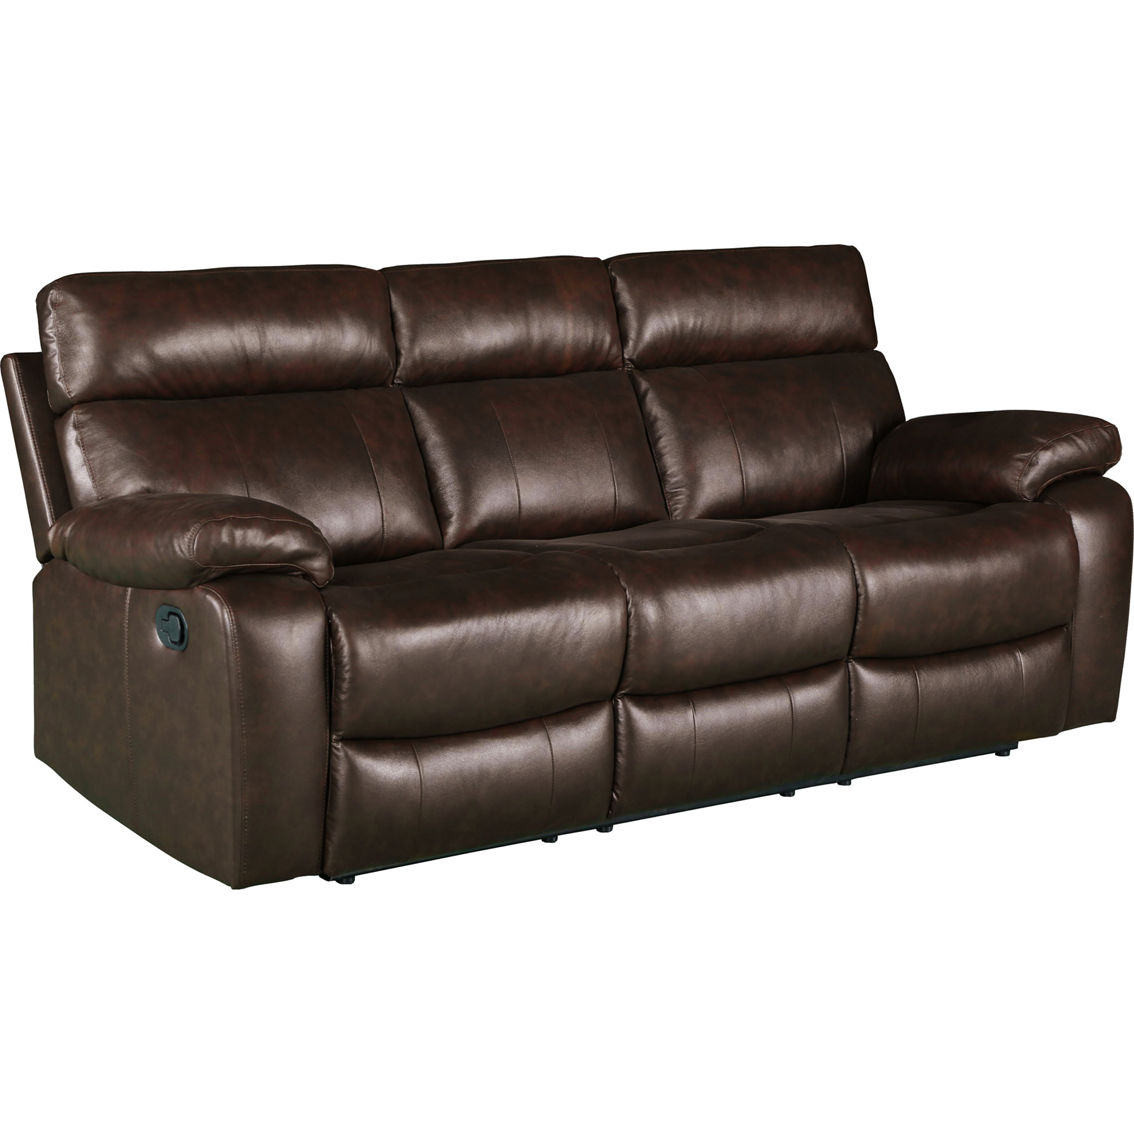 Abbyson Kempton Dark Brown Leather Manual Reclining Sofa | Sofas ...